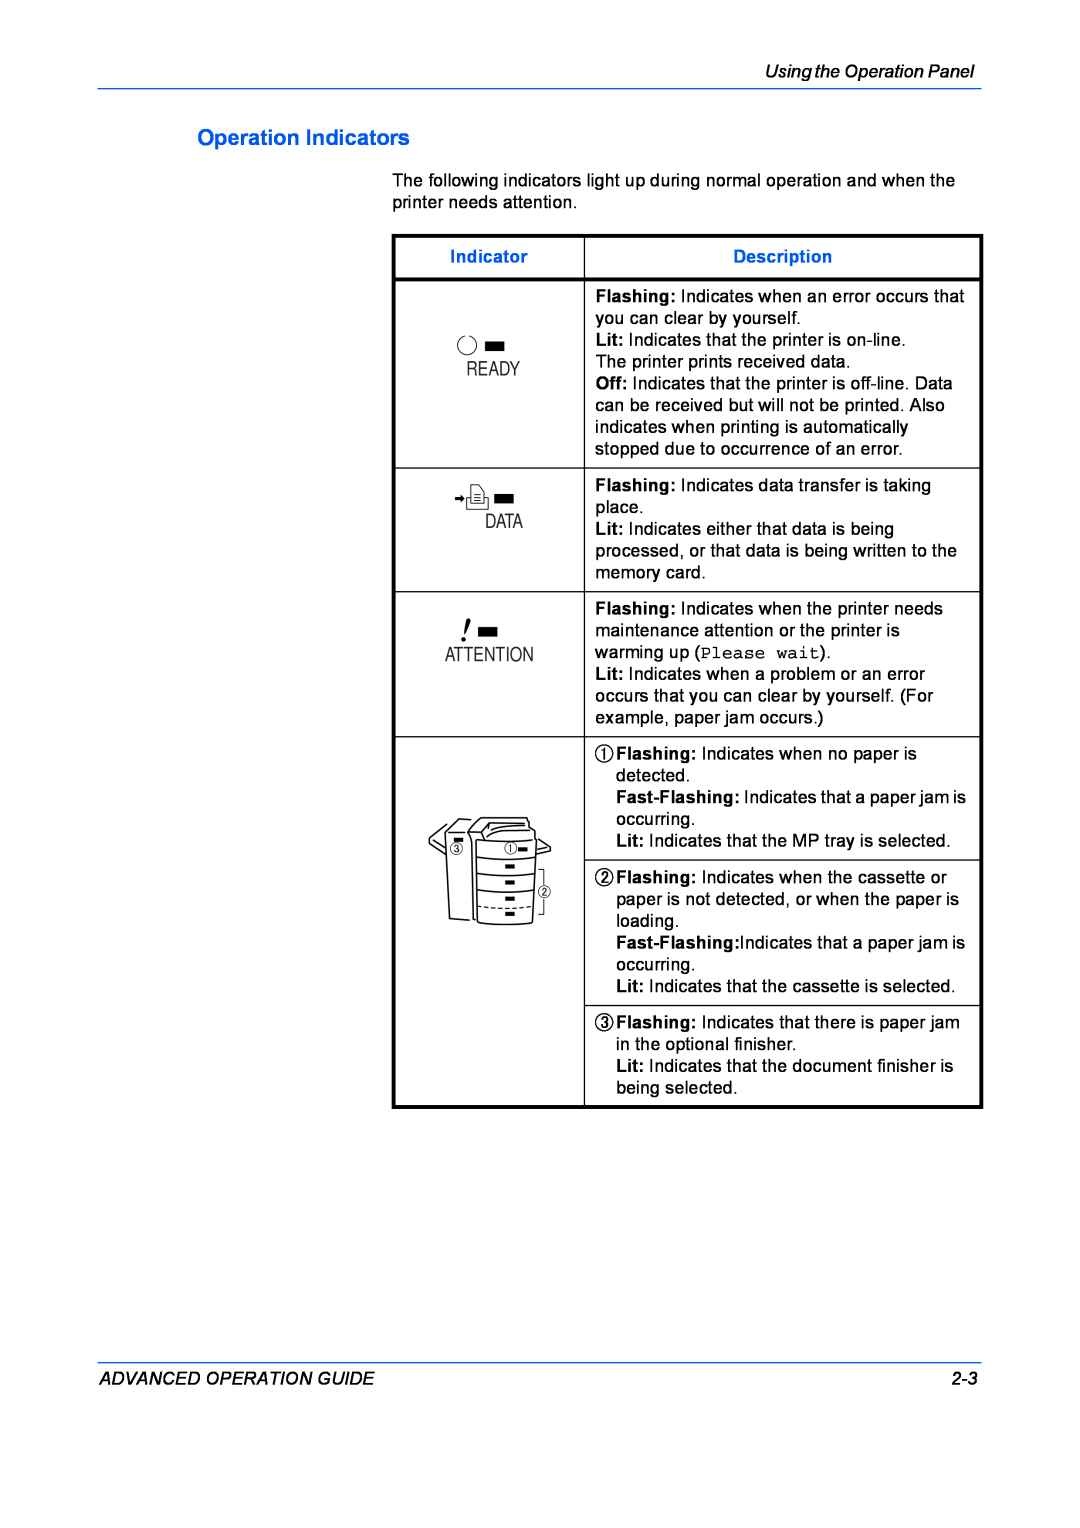 Kyocera 9530DN manual Operation Indicators, Ready, Data, Description 